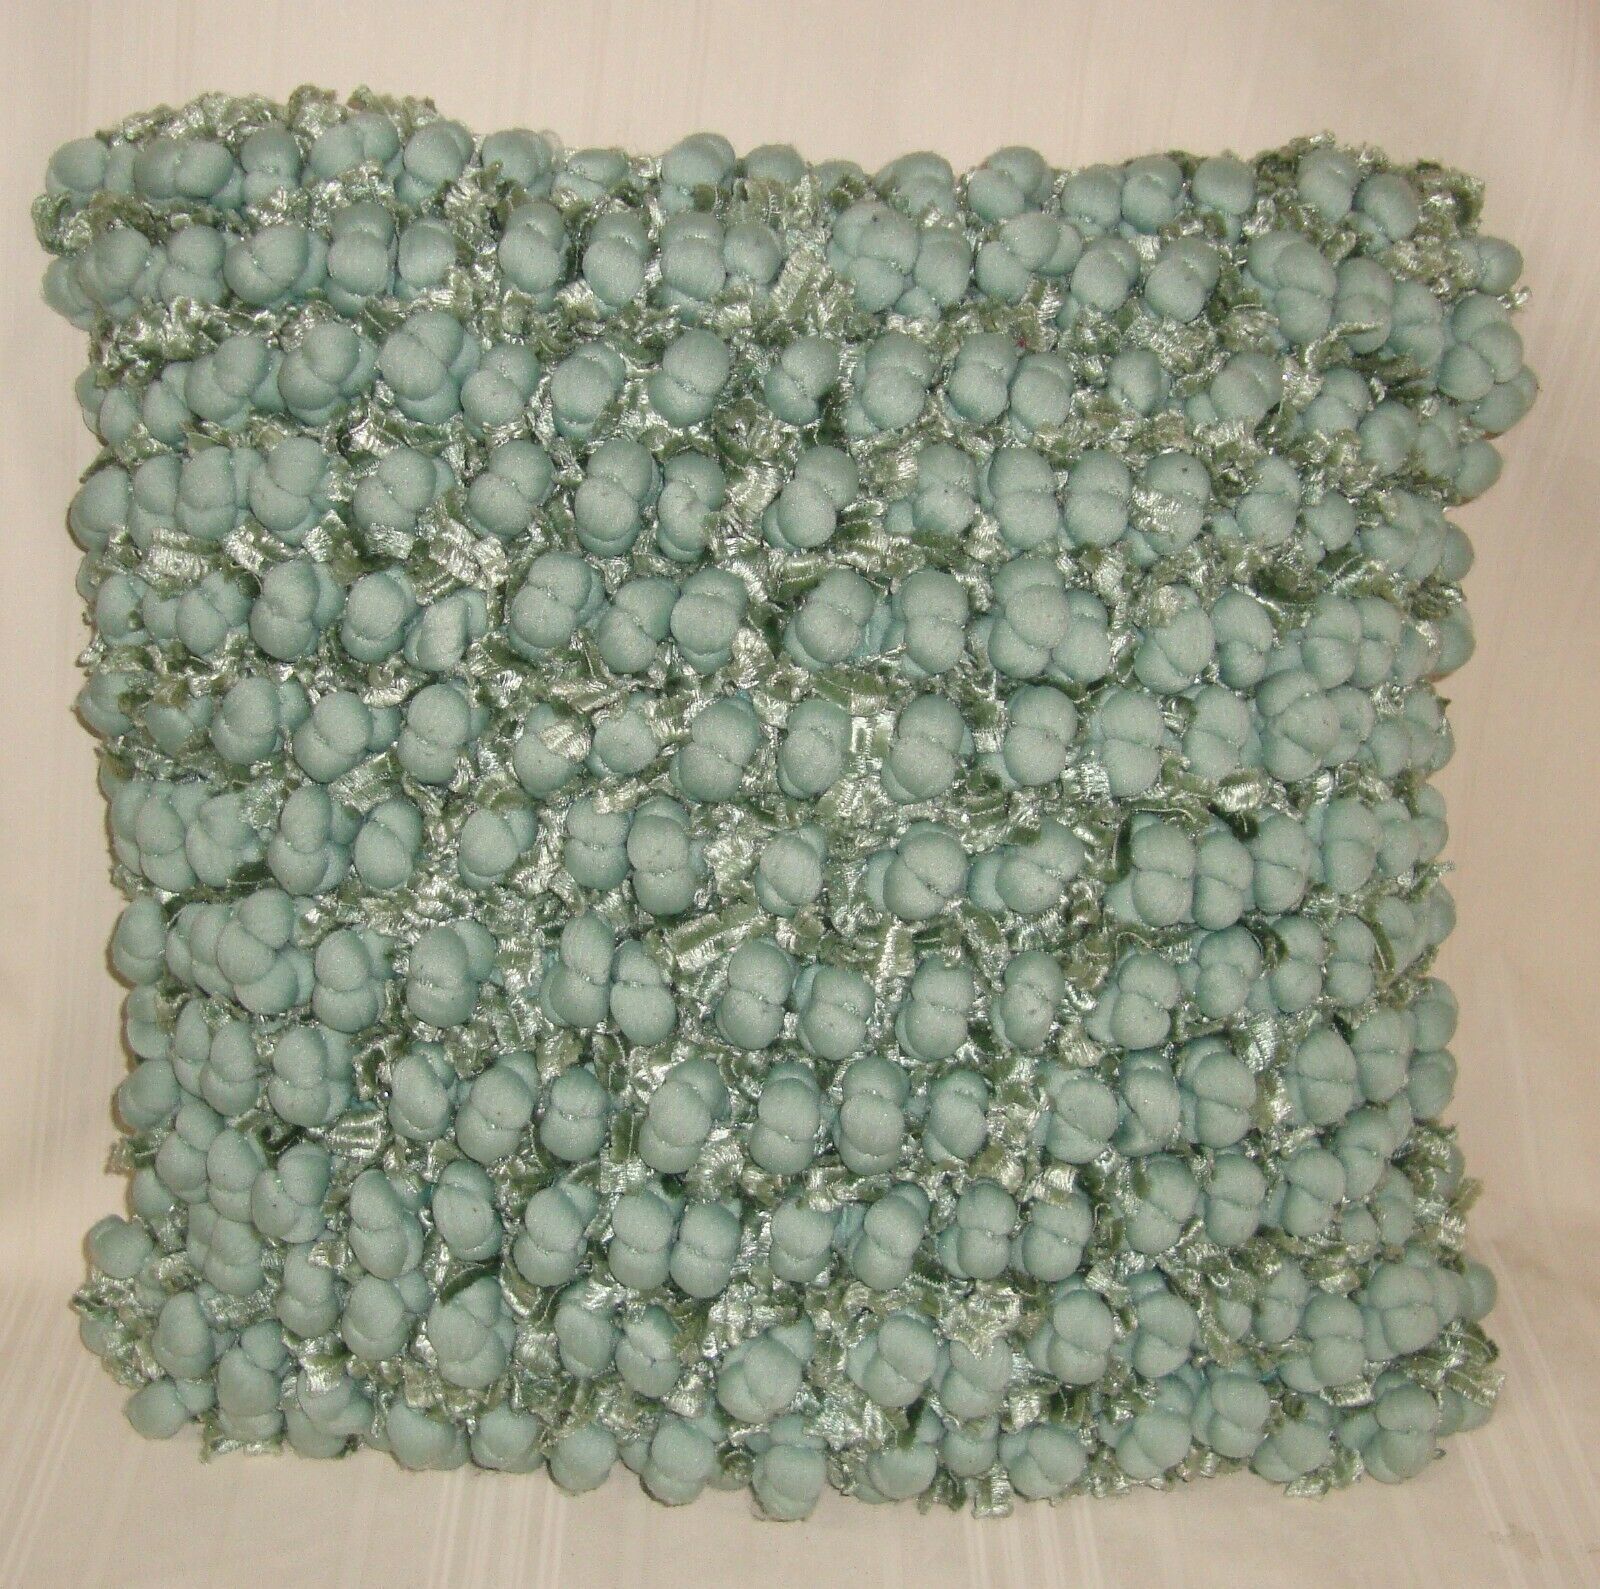  Cynthia Rowley Textured Pebble Ruffle Flounce Square Pillow 18" x 18" - $34.64